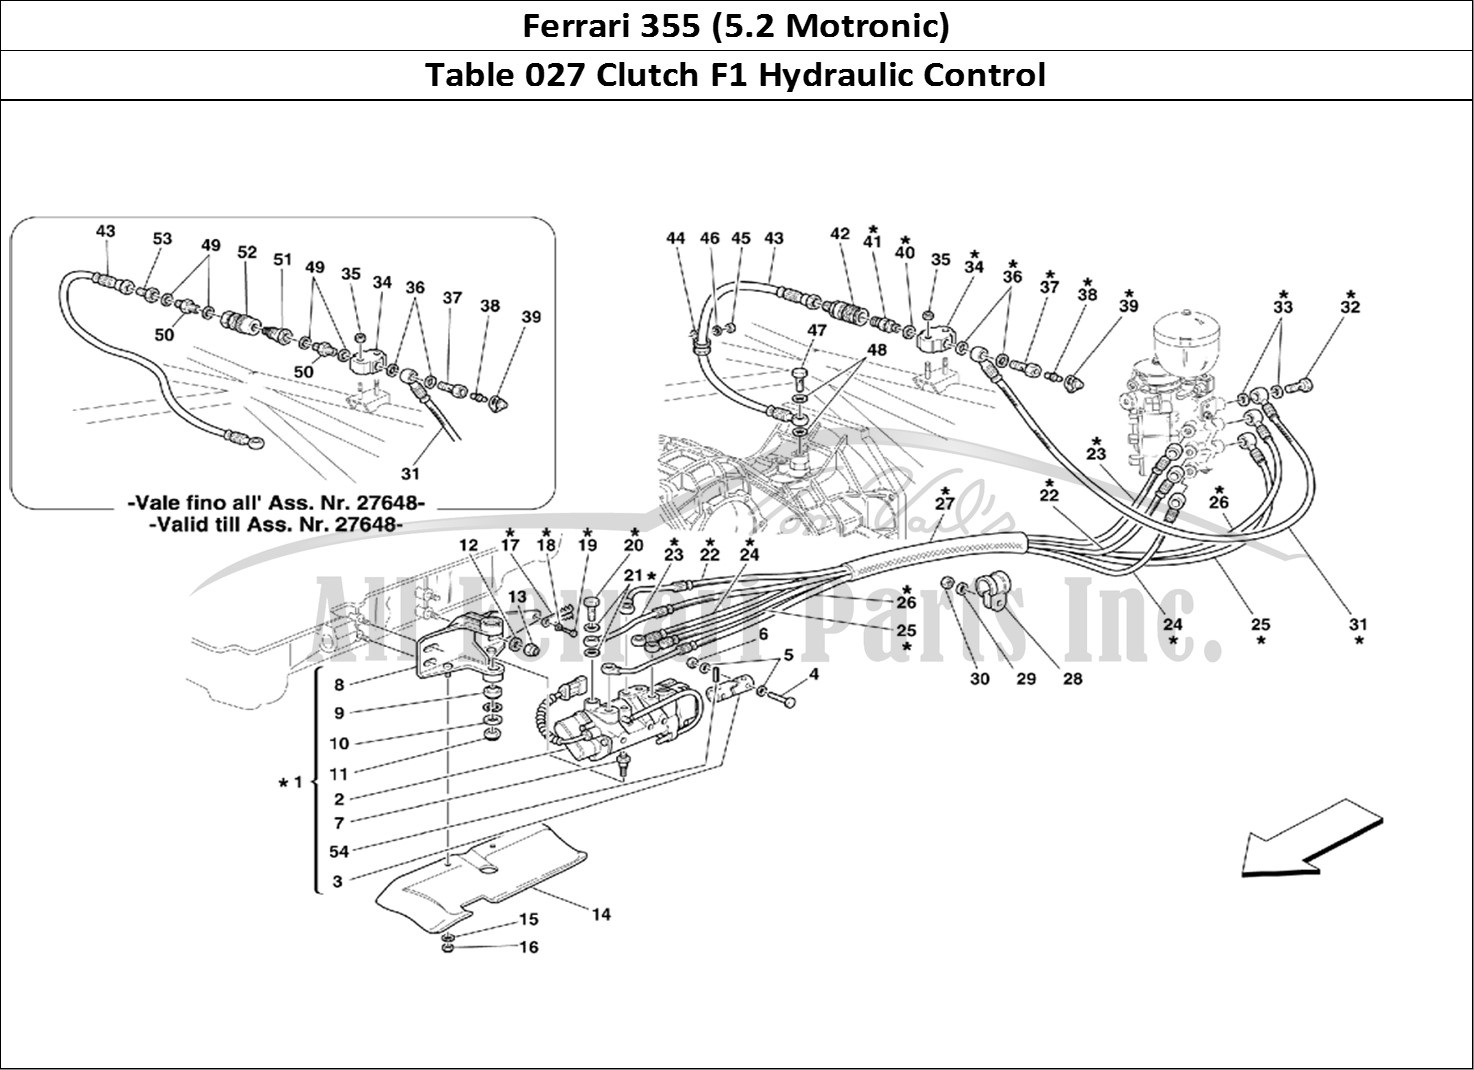 Ferrari Parts Ferrari 355 (5.2 Motronic) Page 027 F1 Clutch Hydraulic Contr